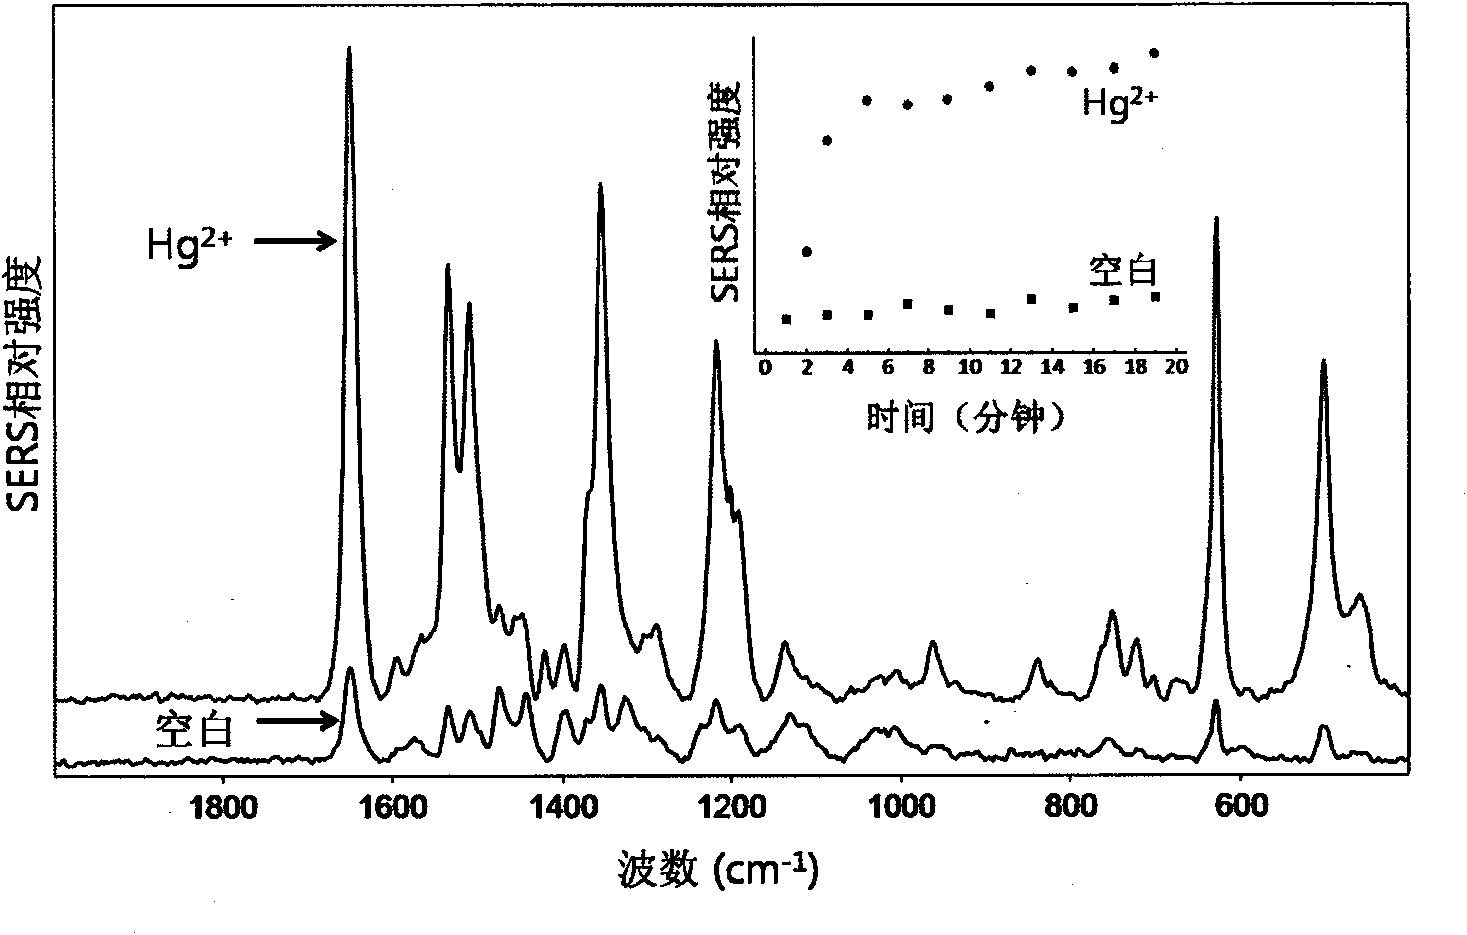 Mercury ion detection reagent and detection method